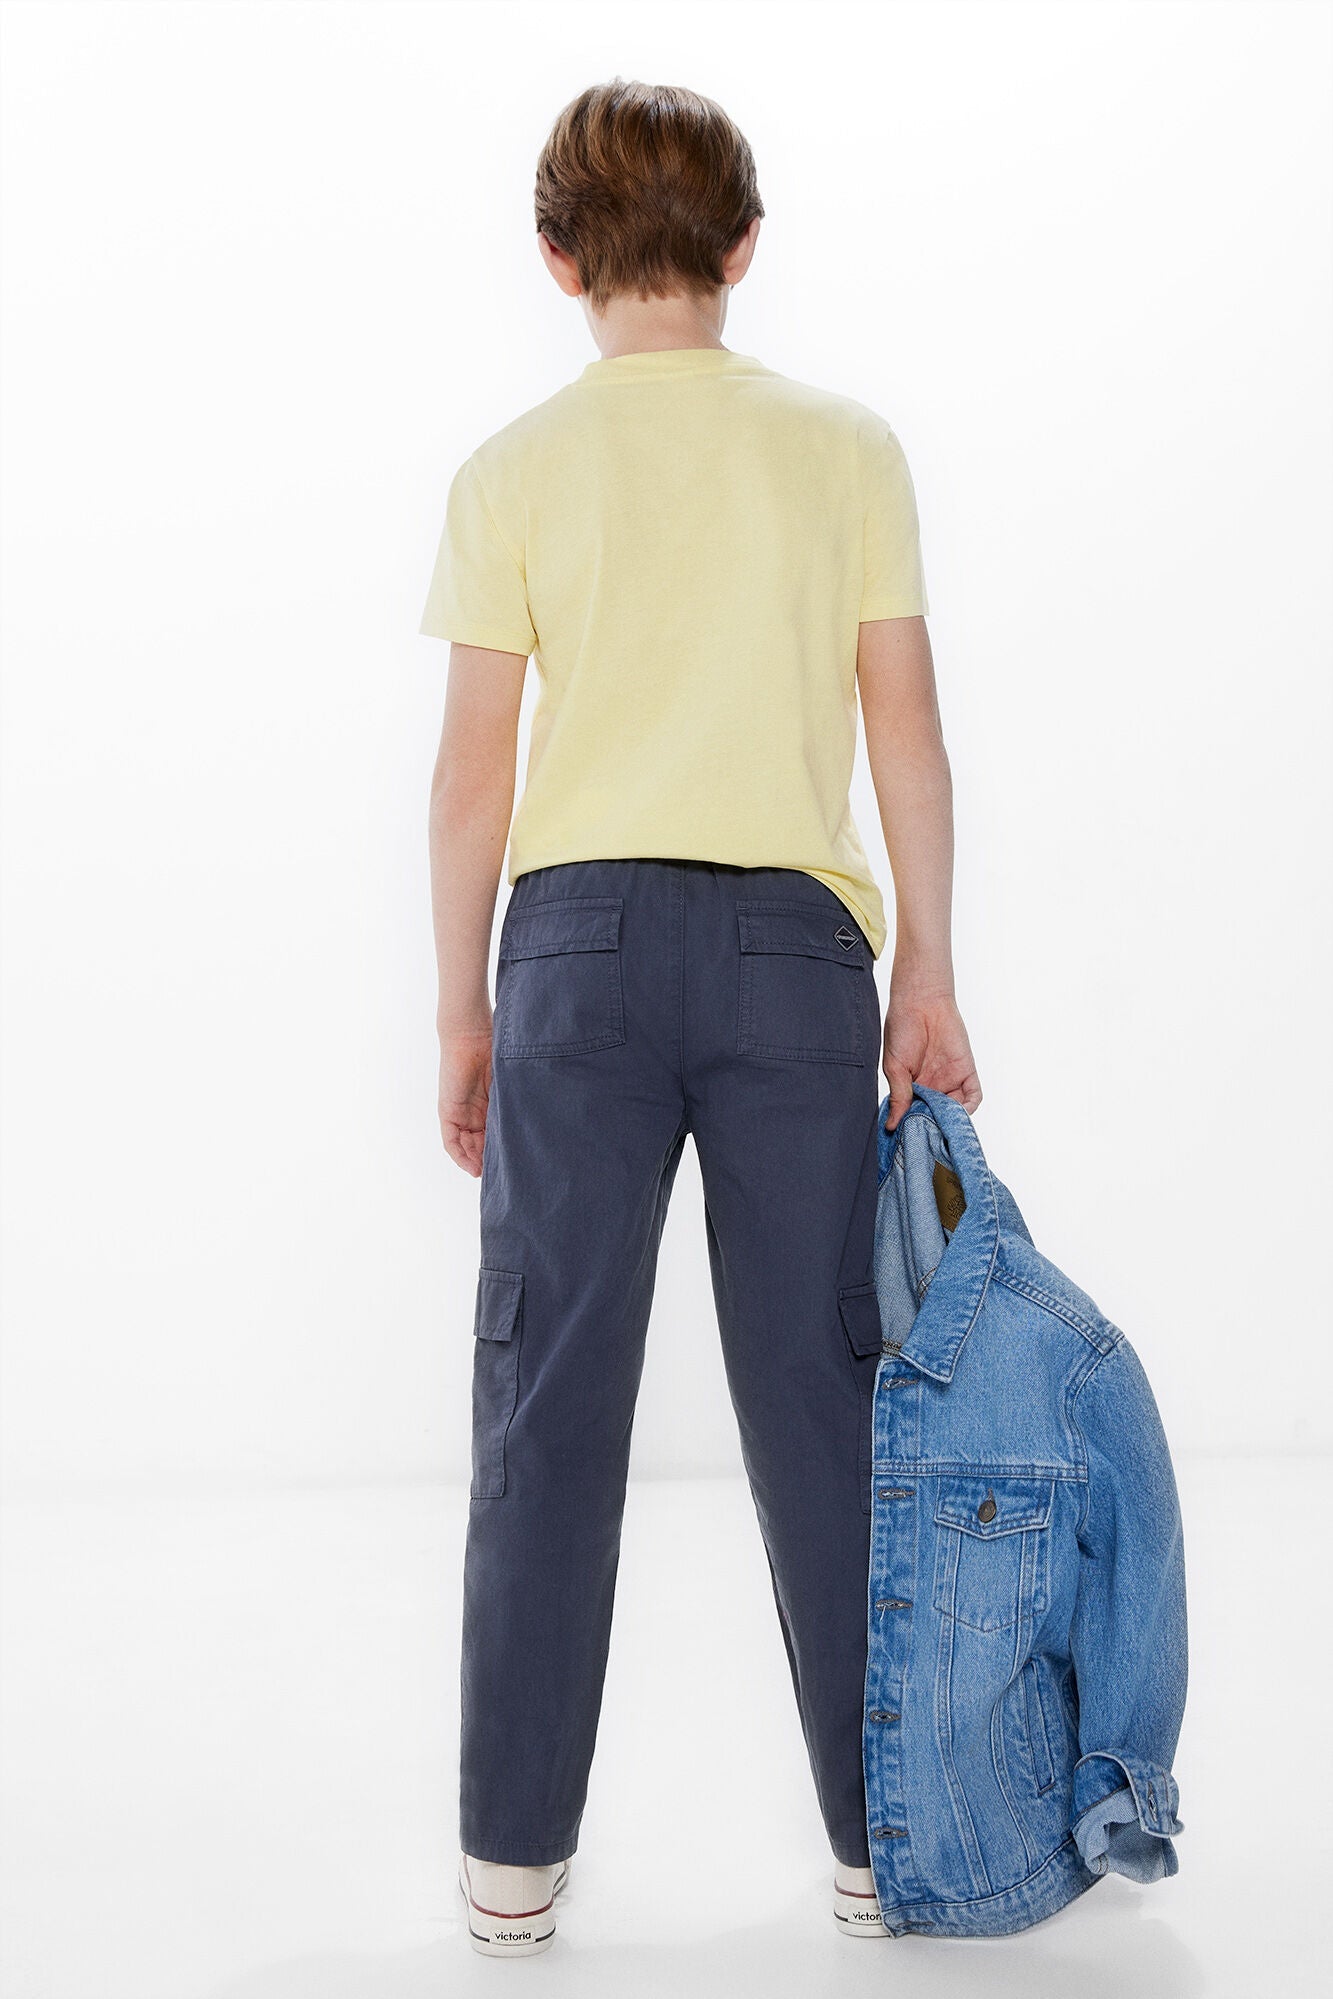 Boys' cargo trousers